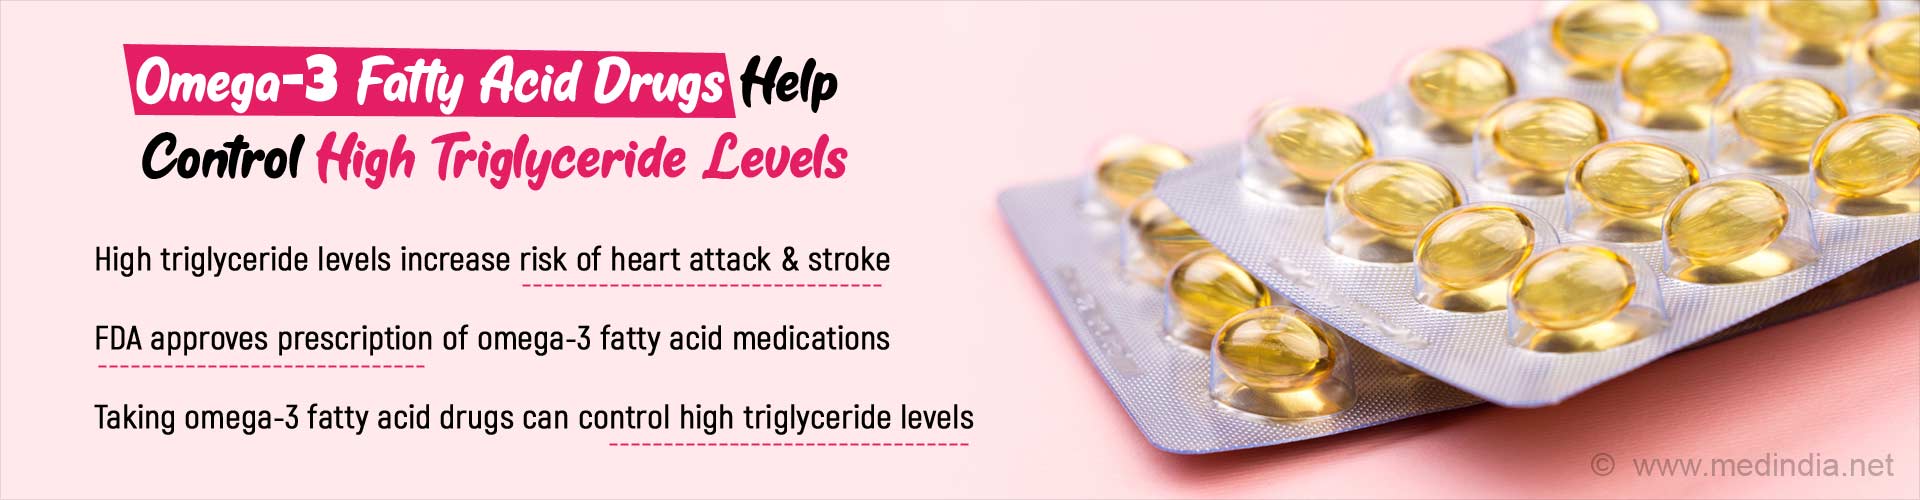 Take Omega-3 Fatty Acid Medications to Control High Triglyceride Levels